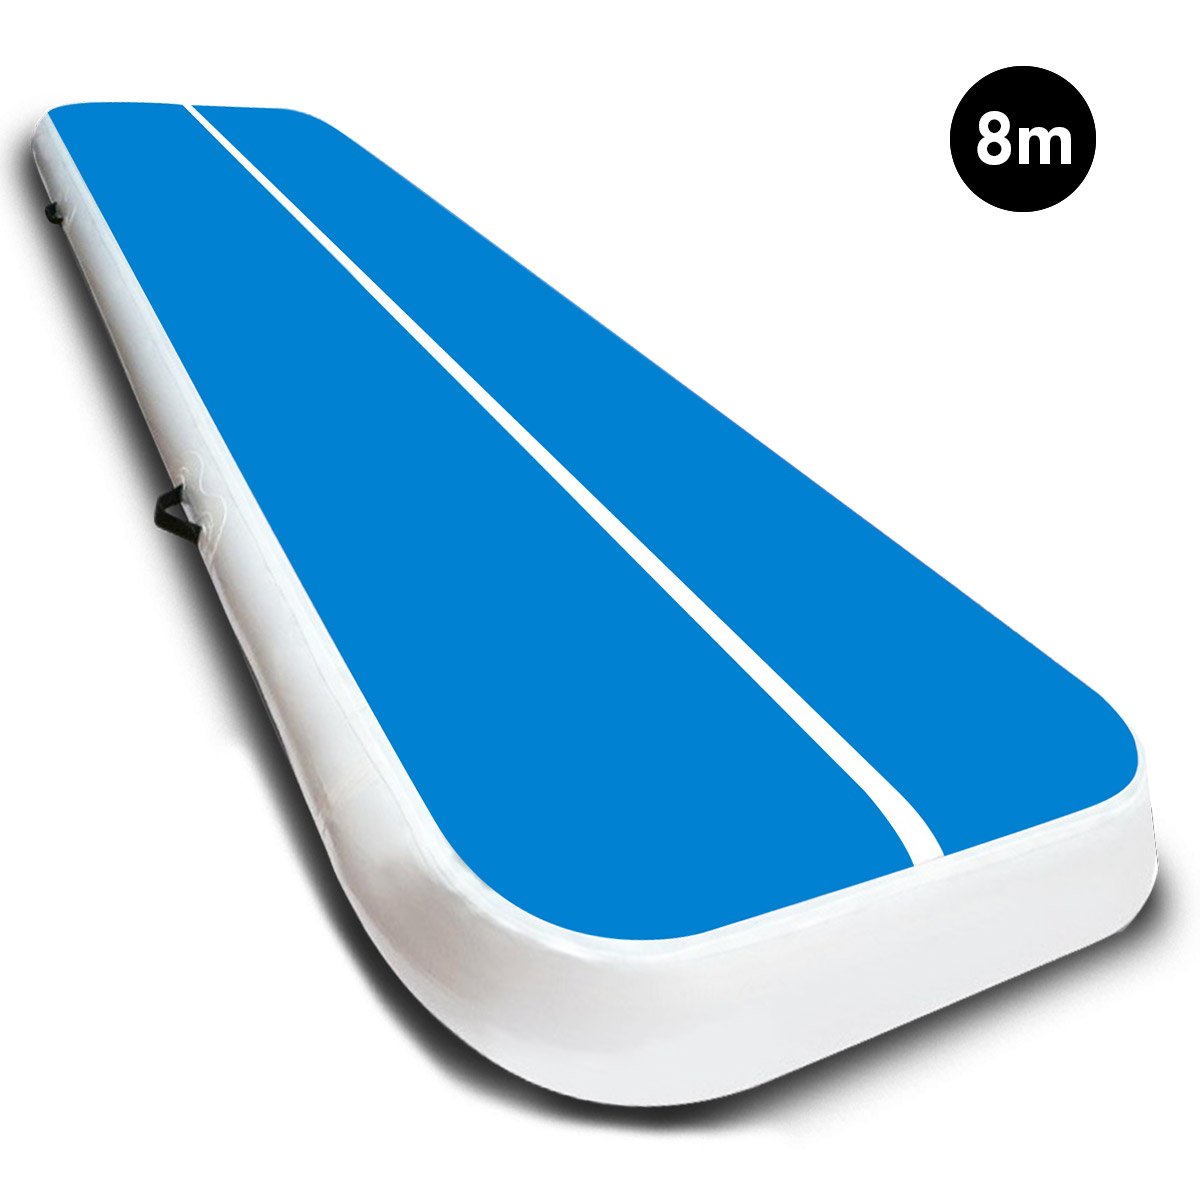 8m x 1m Air Track Inflatable Tumbling Gymnastics Mat - Blue White 1